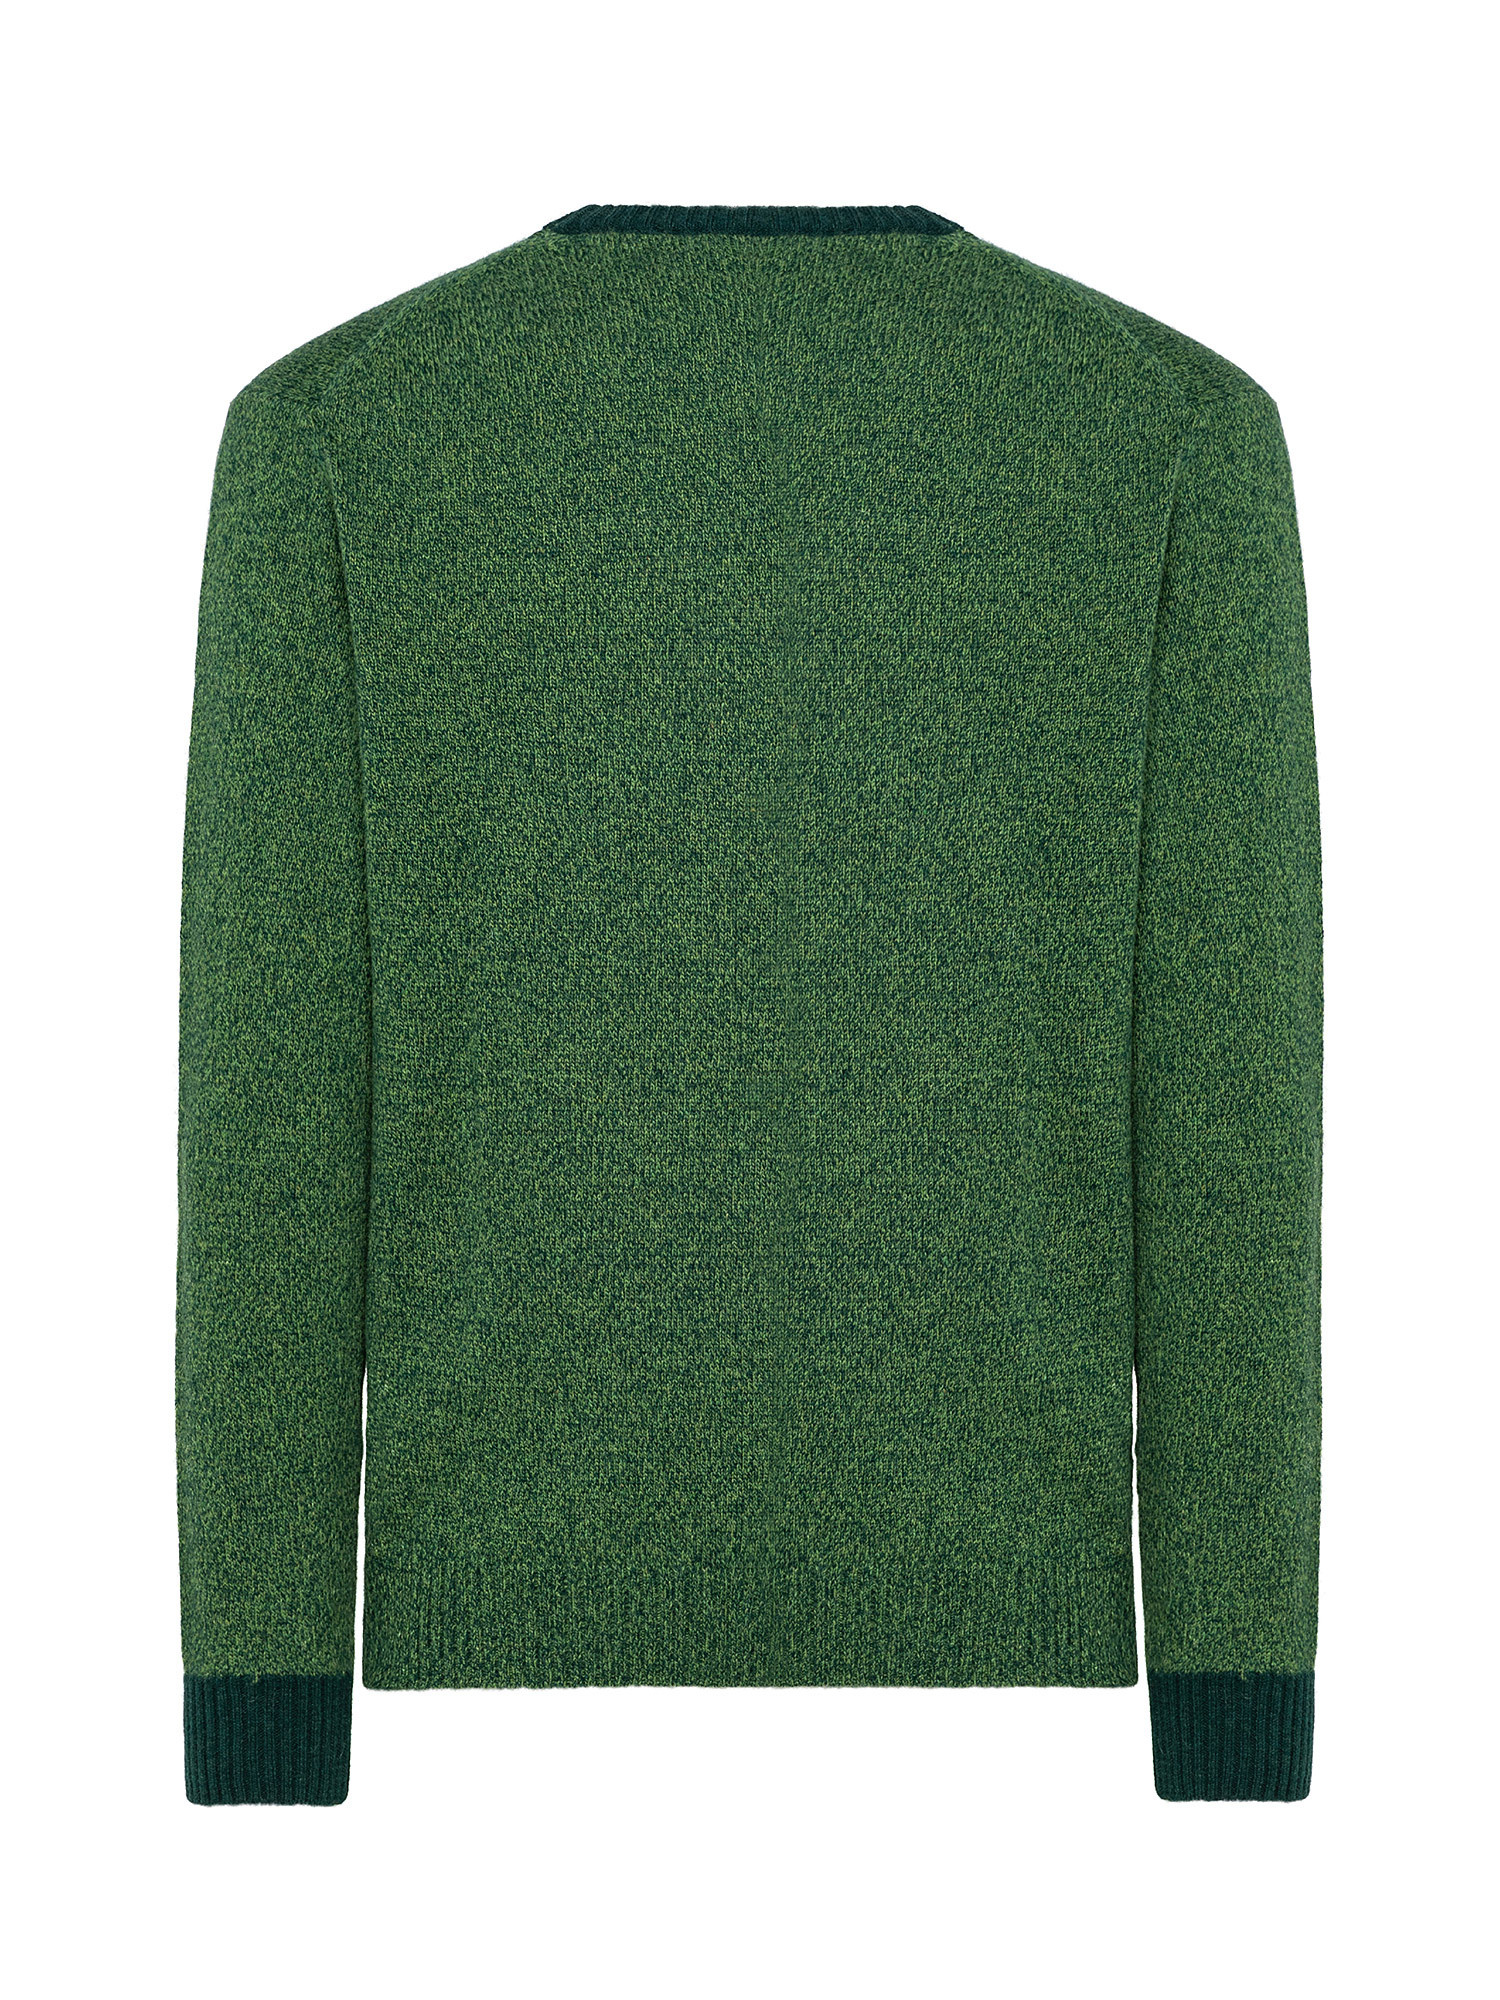 Crewneck pullover, Green, large image number 1